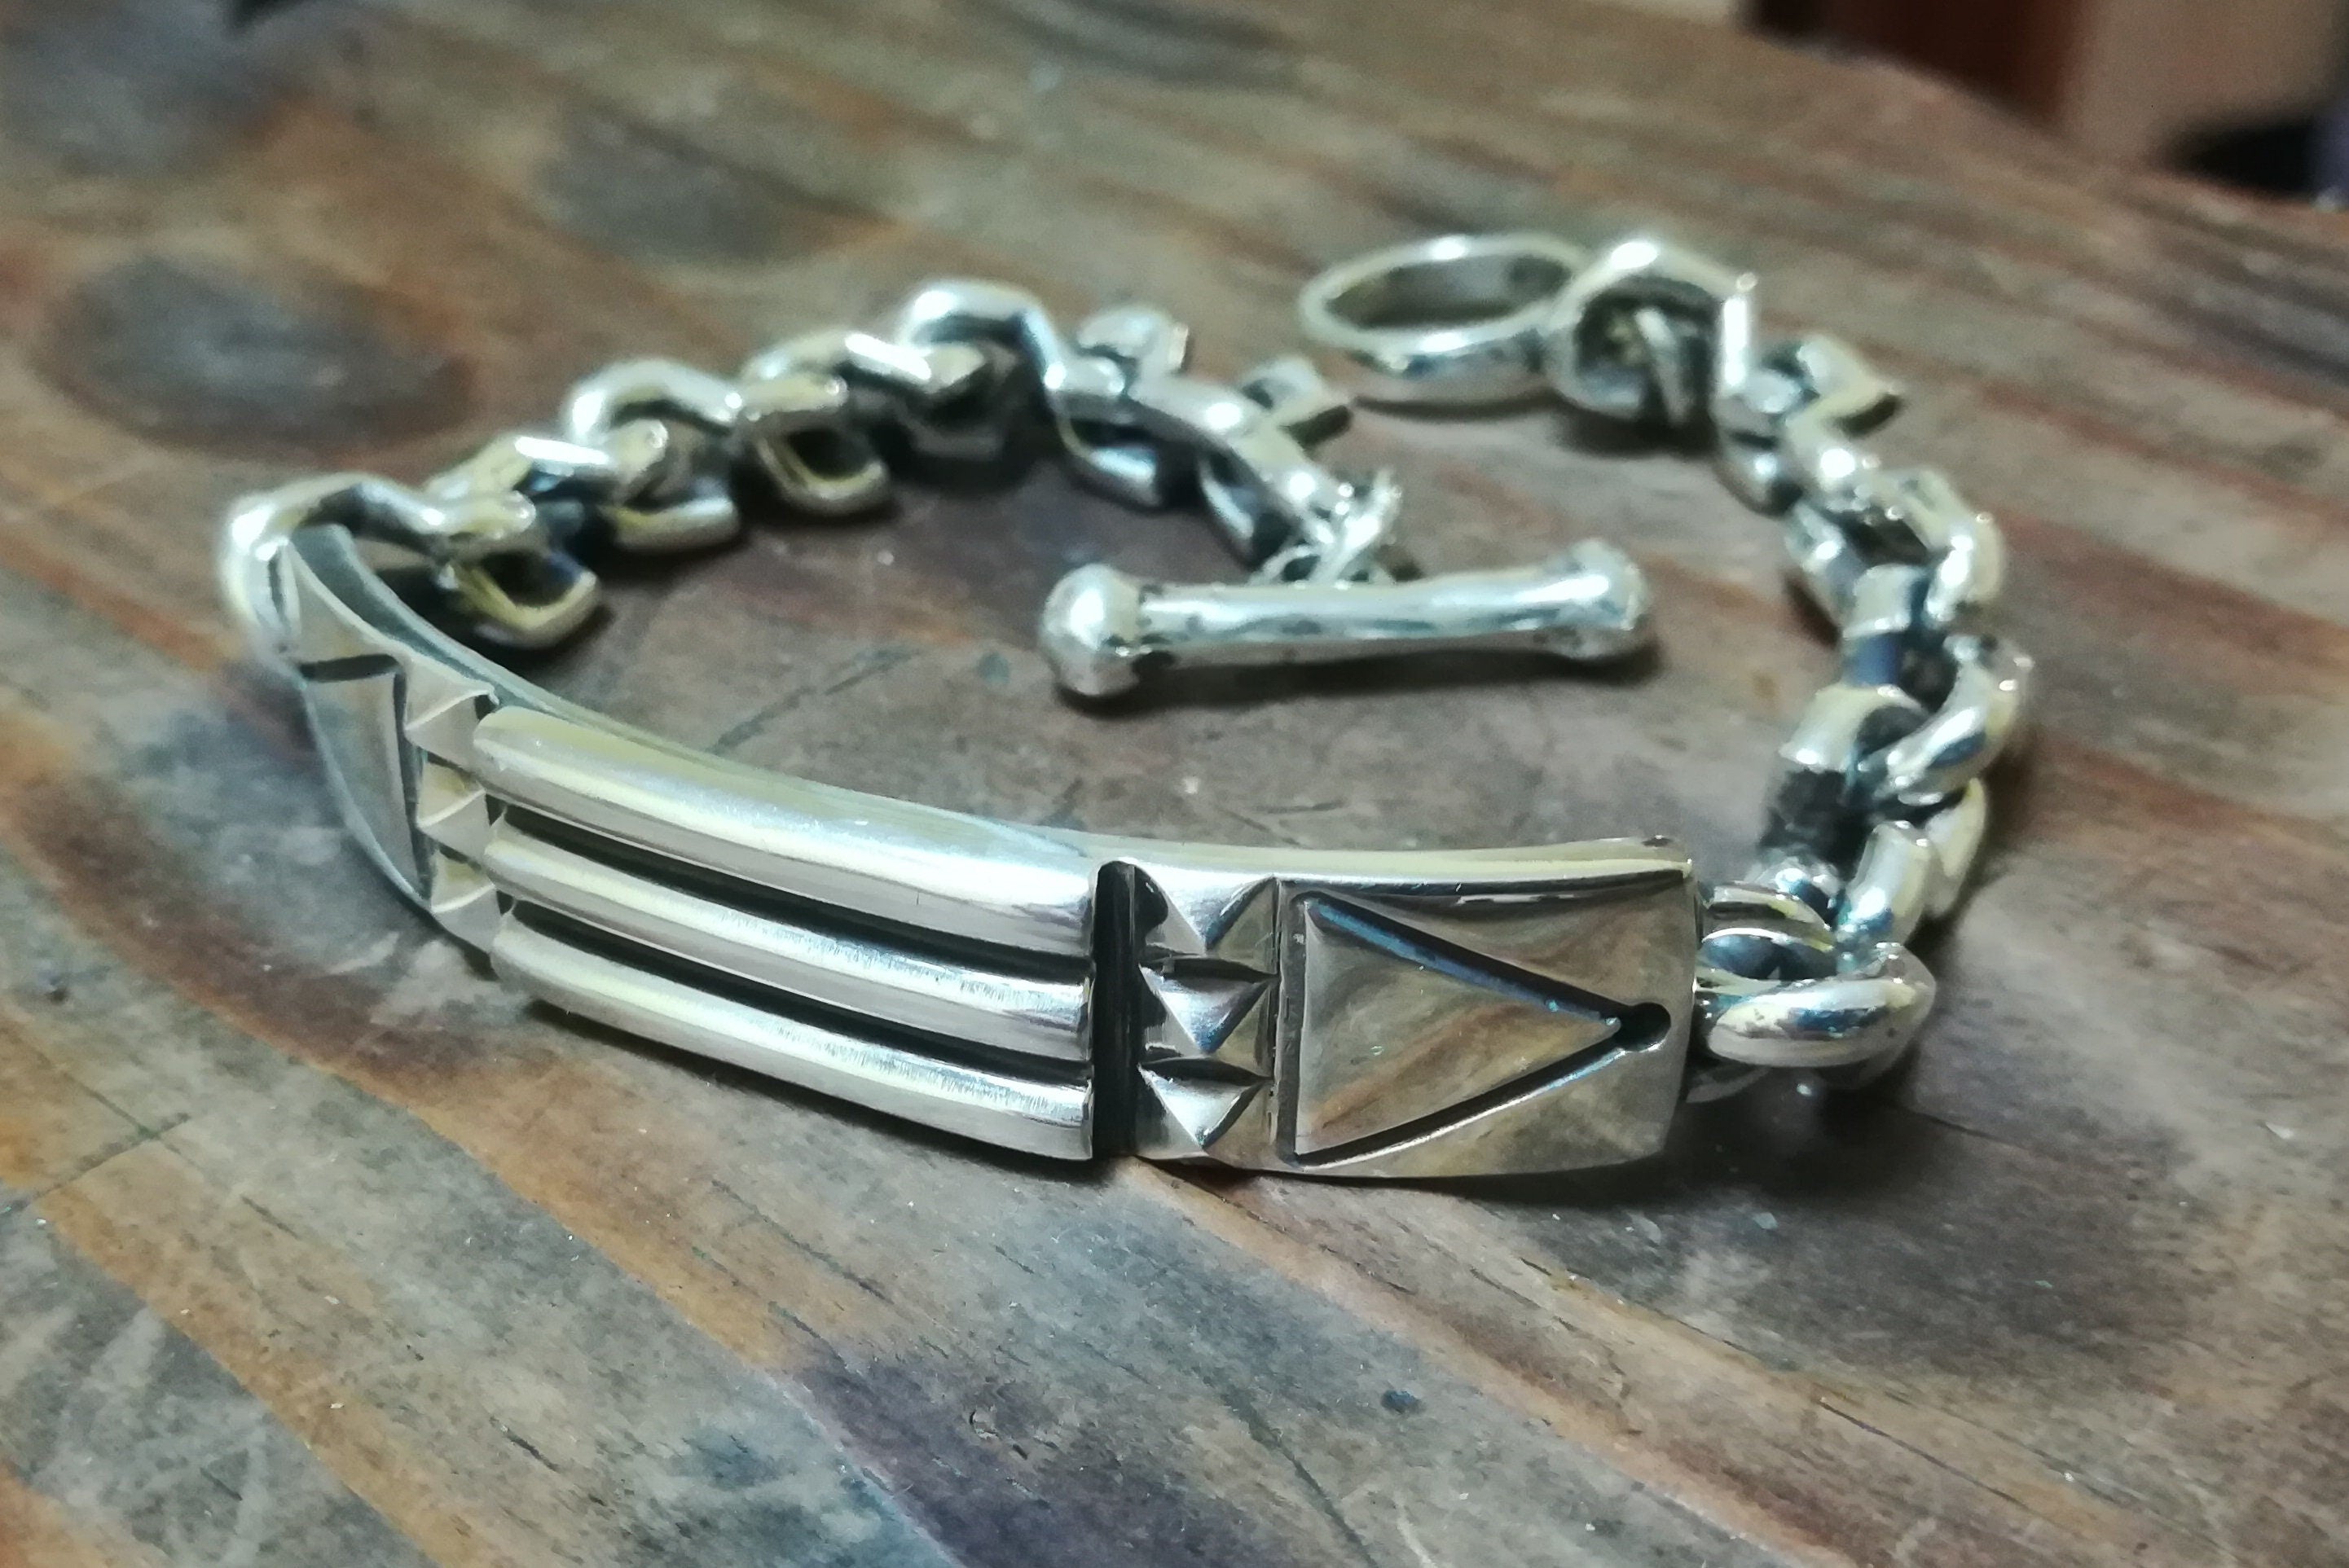 Atlantis Bracelet - Sterling Silver chain bracelet. Toggle closure.